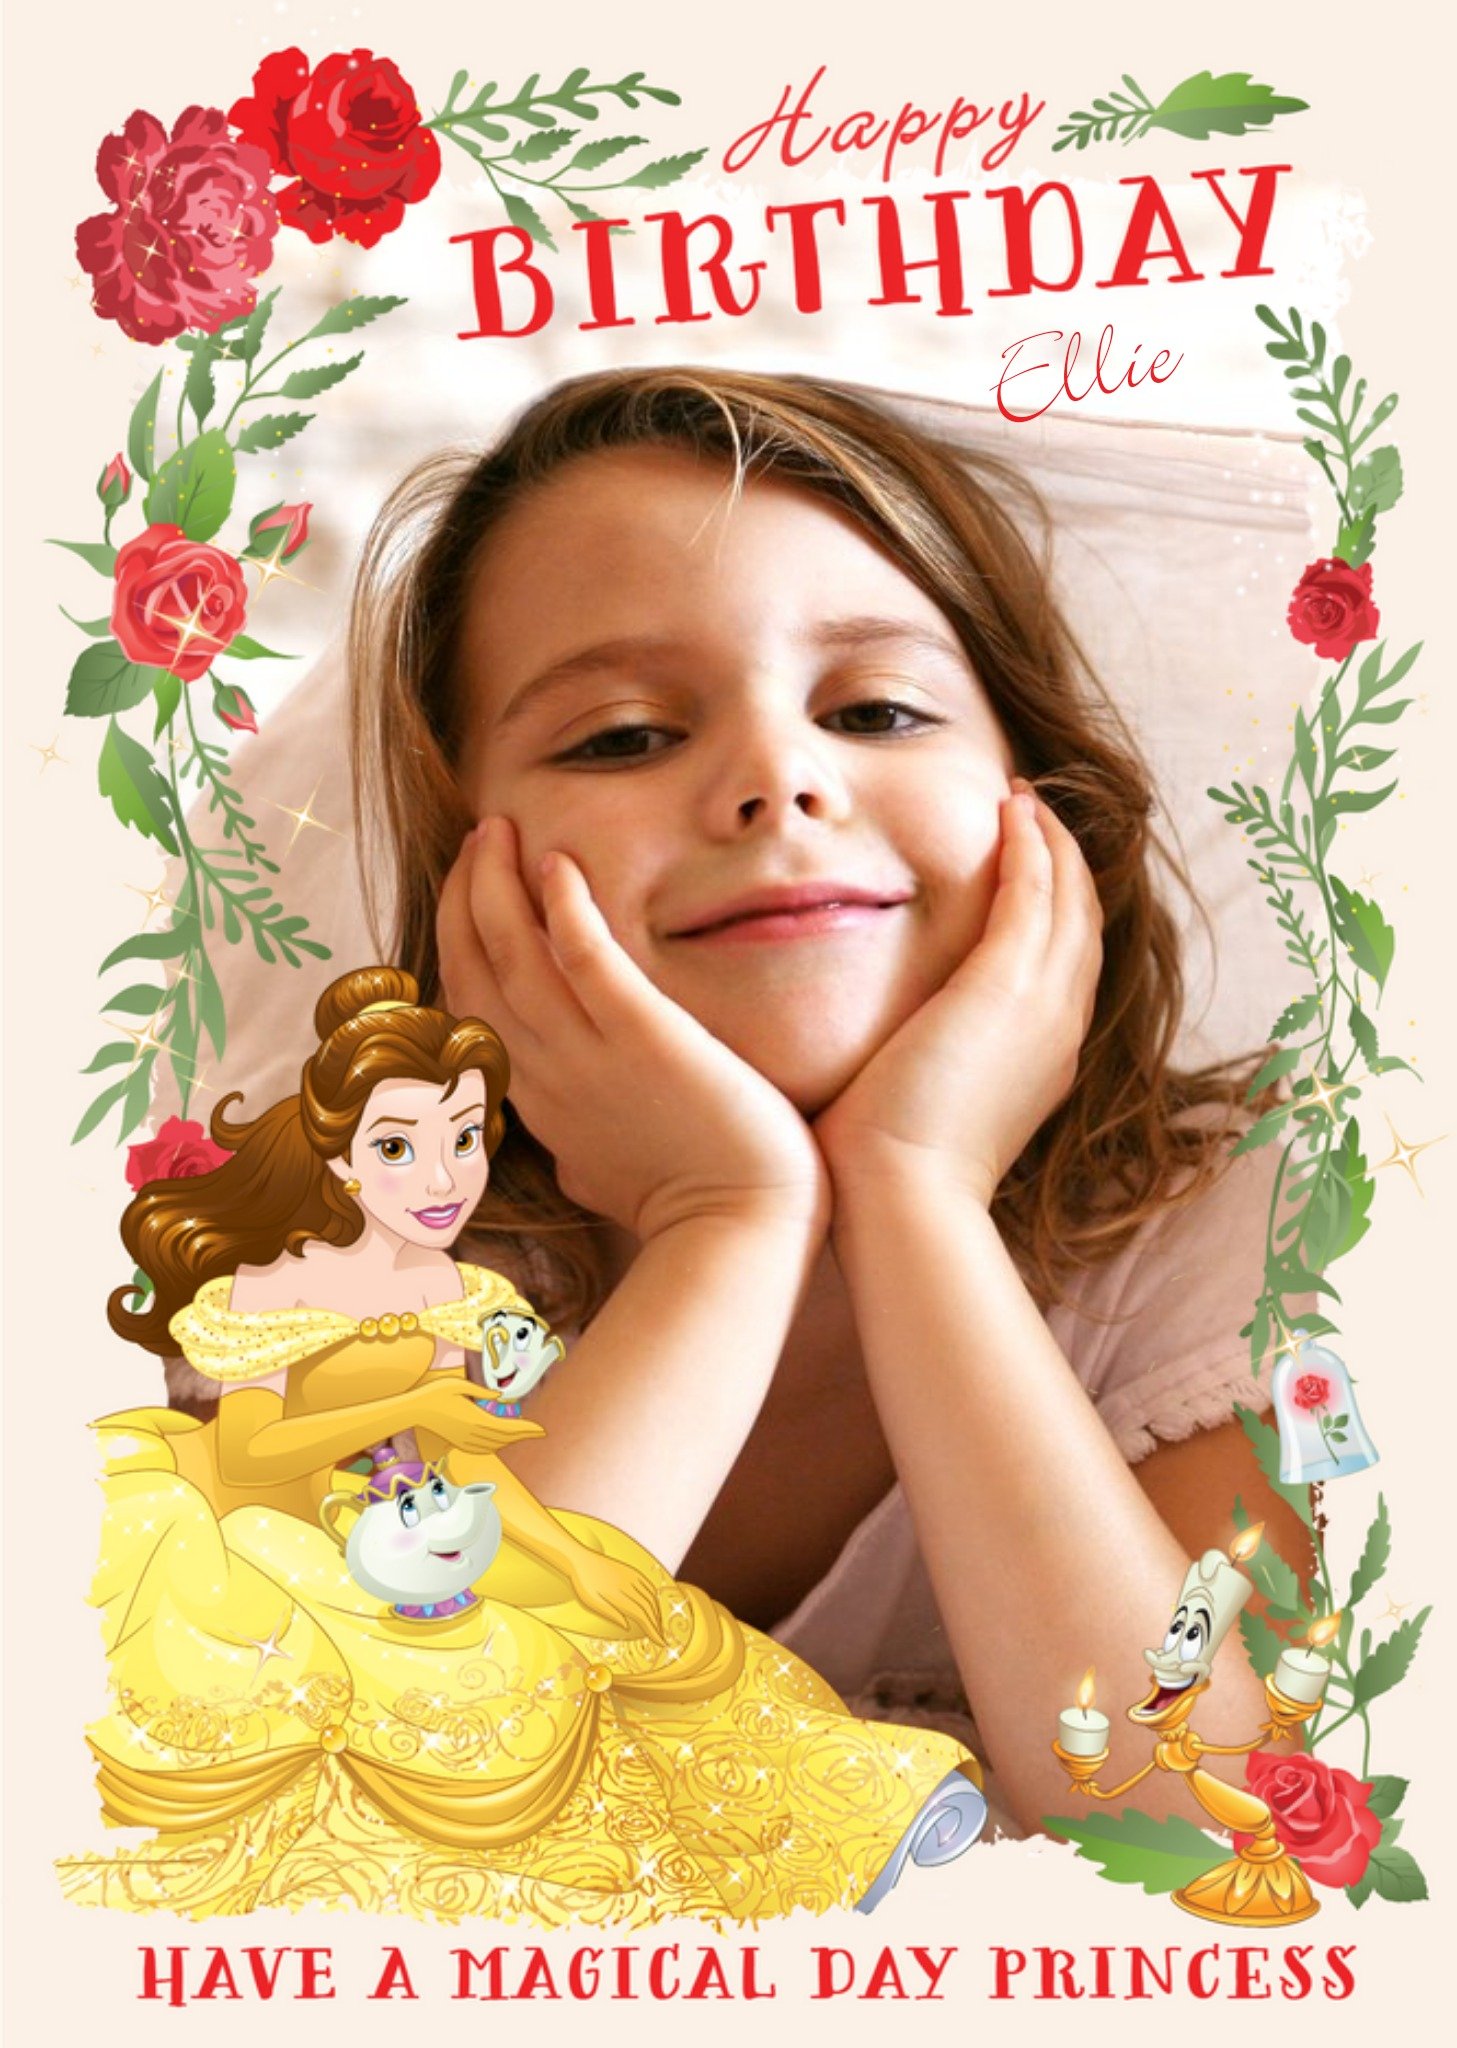 Disney Princesses Disney Princess Belle Happy Birthday Photo Card, Large